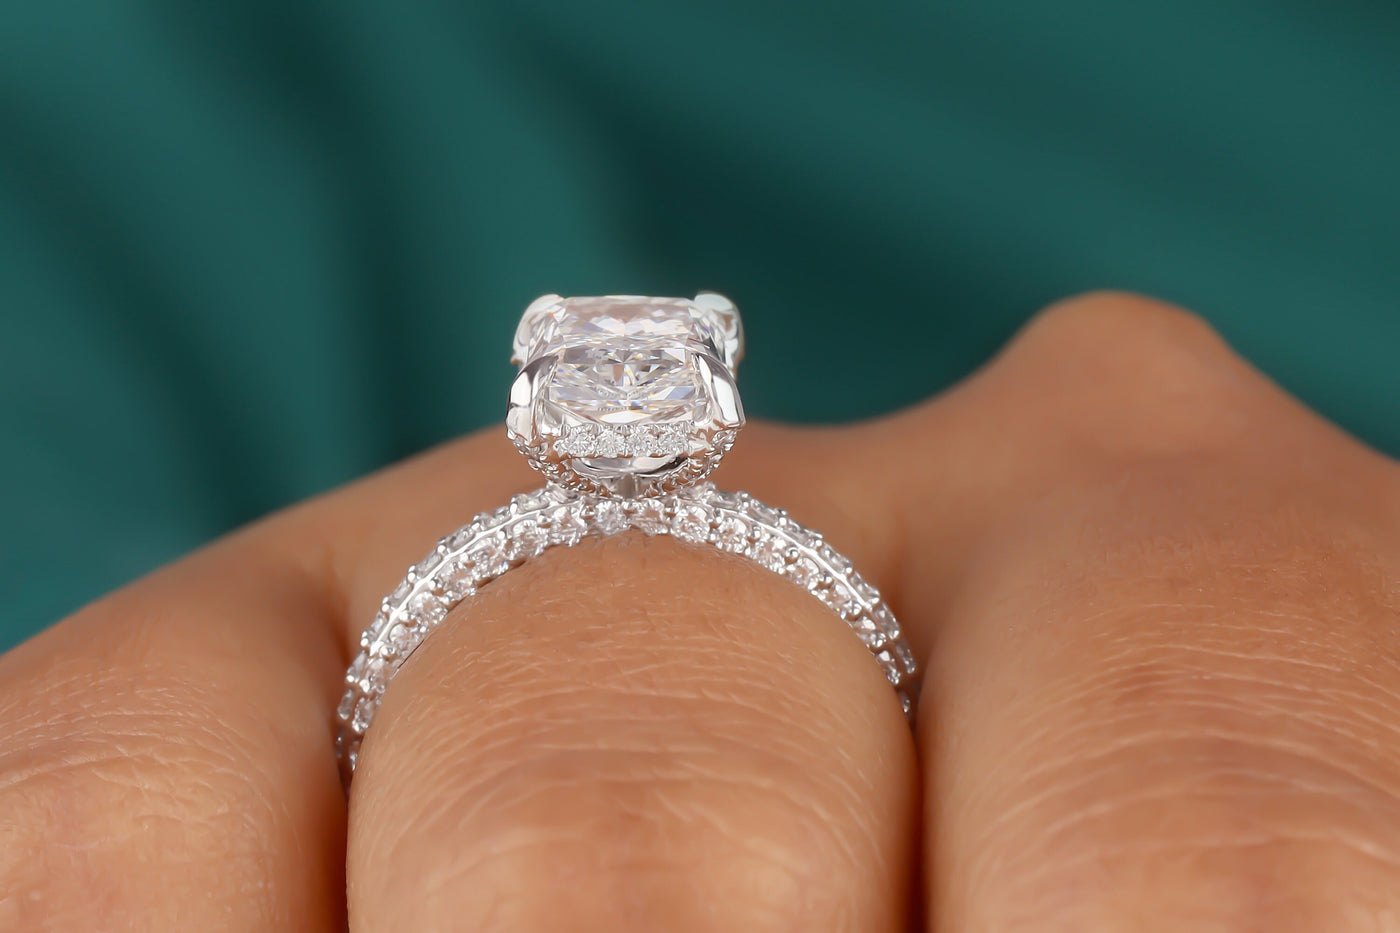 3 CT Radiant Cut Colorless Moissanite Ring, Halo Ring, Moissanite Engagement Ring, Solid 14K White Gold Wedding Ring, Handmade Bridal Ring